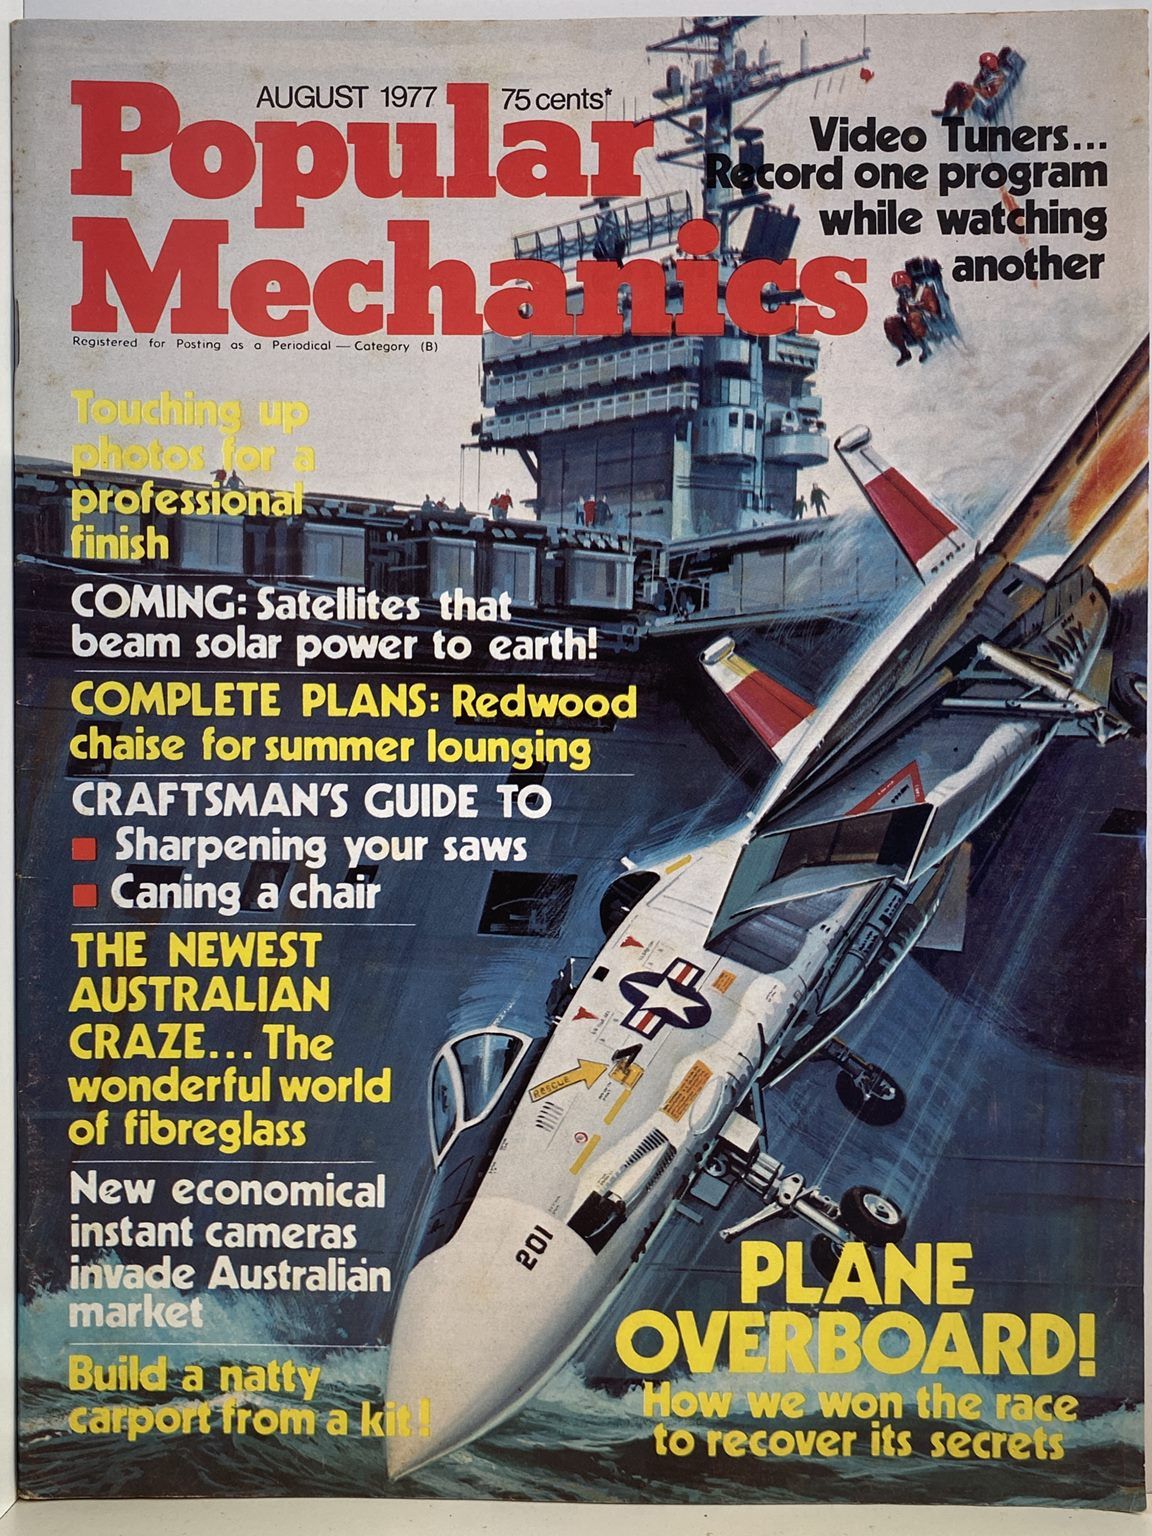 VINTAGE MAGAZINE: Popular Mechanics - Vol. 146, No. 8 - August 1977